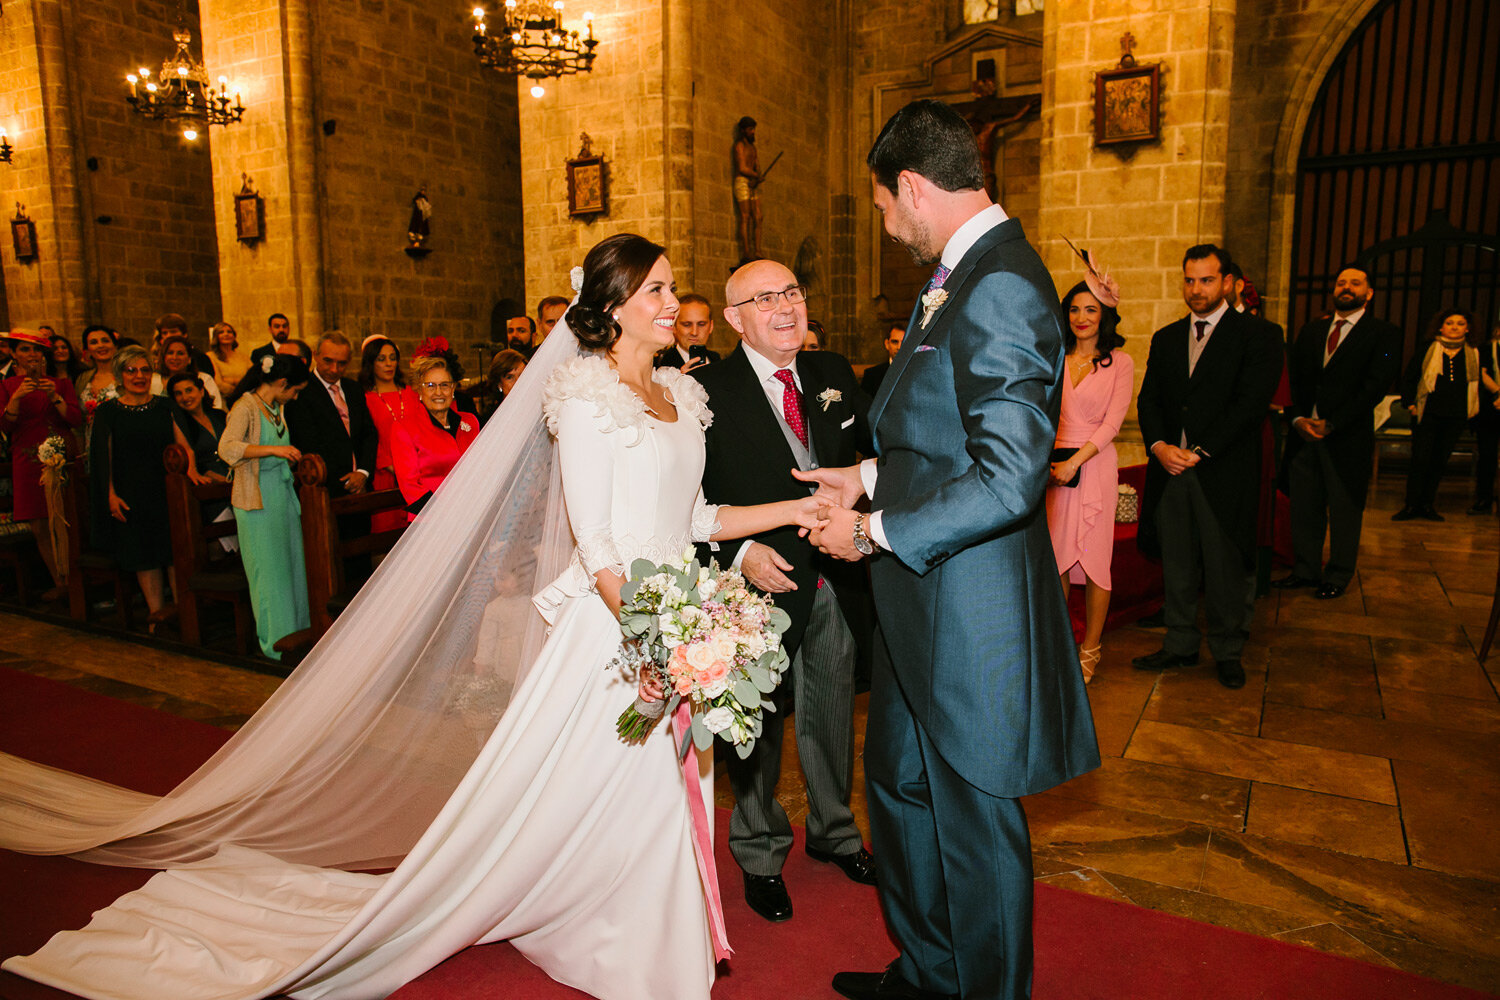 108-vilayvidal-fotografia-bodas-gandia-valencia-alicante-boda-elia-fernando_mas_dalzedo.jpg